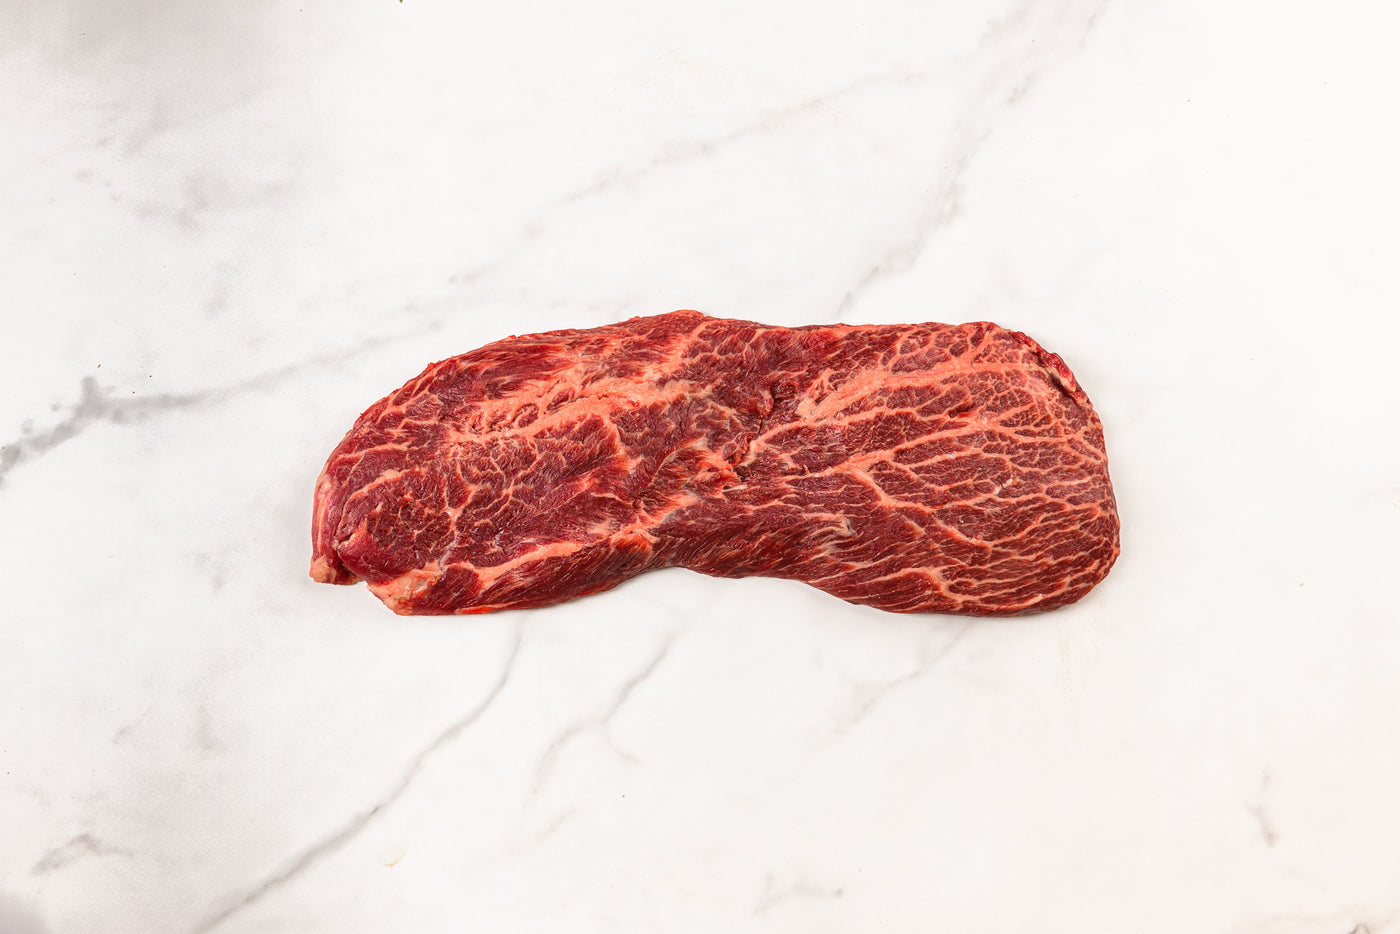 London Broil steak on marble background